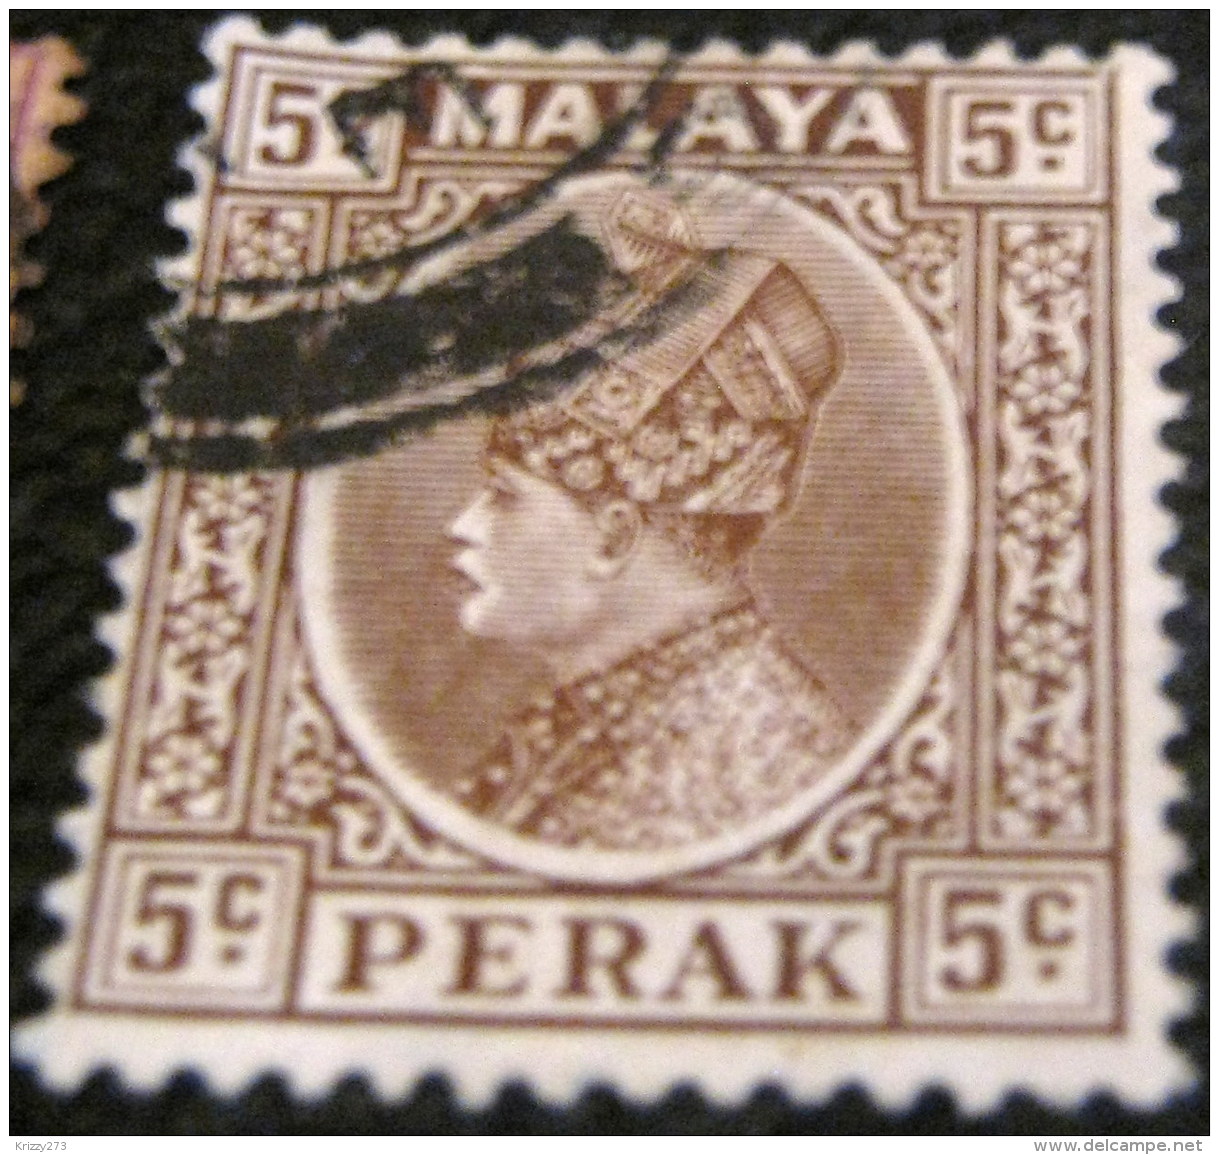 Perak 1935 Sultan Iskander 5c - Used - Perak